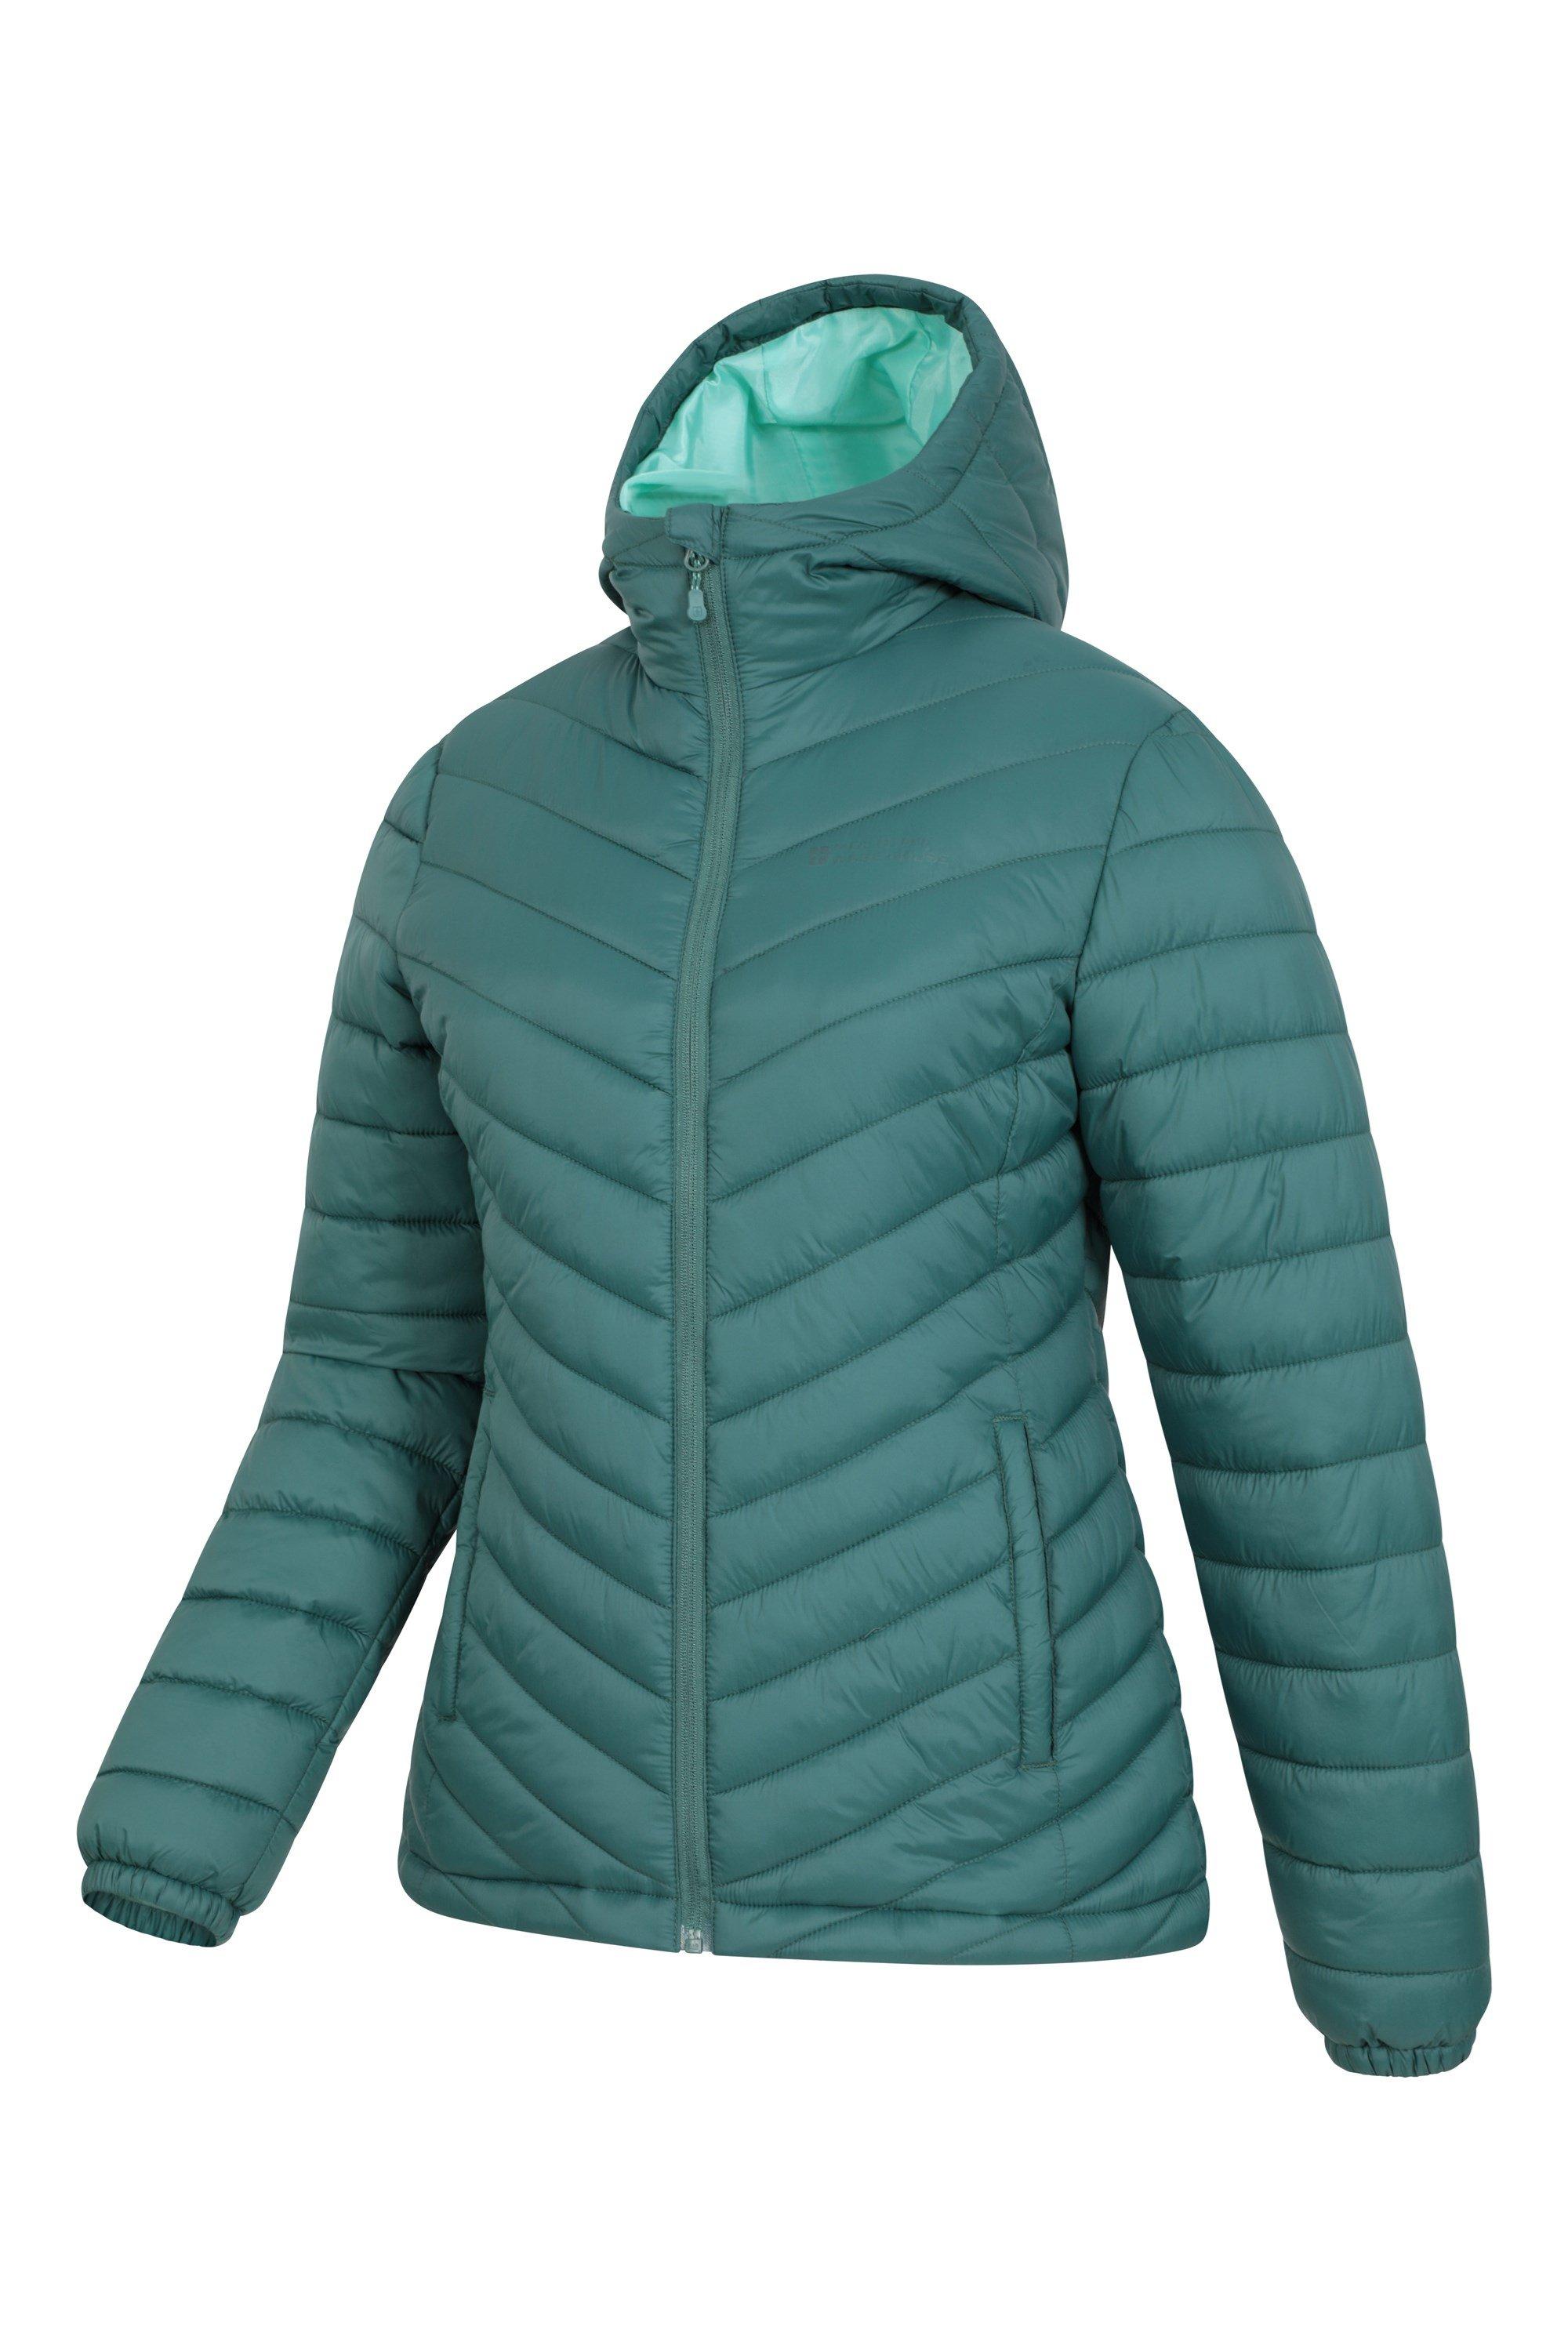 Mountain Warehouse Mens Seasons Padded Jacket Puffer Water Resistant Winter  Coat